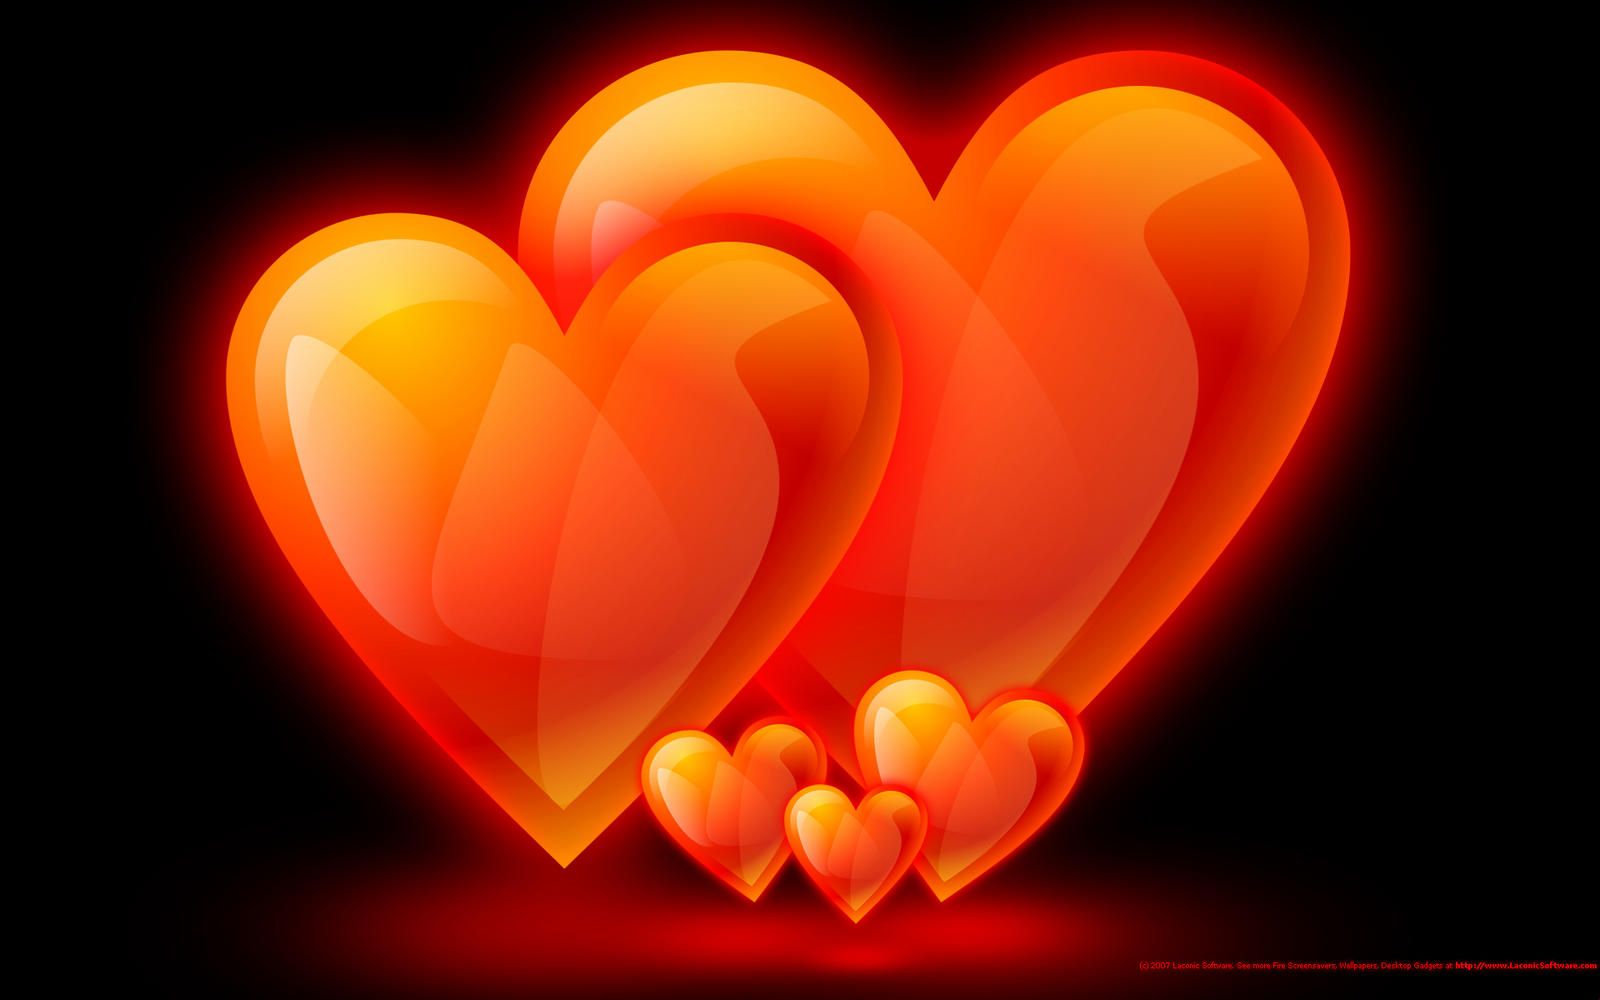 Hearts In Love New Love MySpace Wallpaper - Blicer